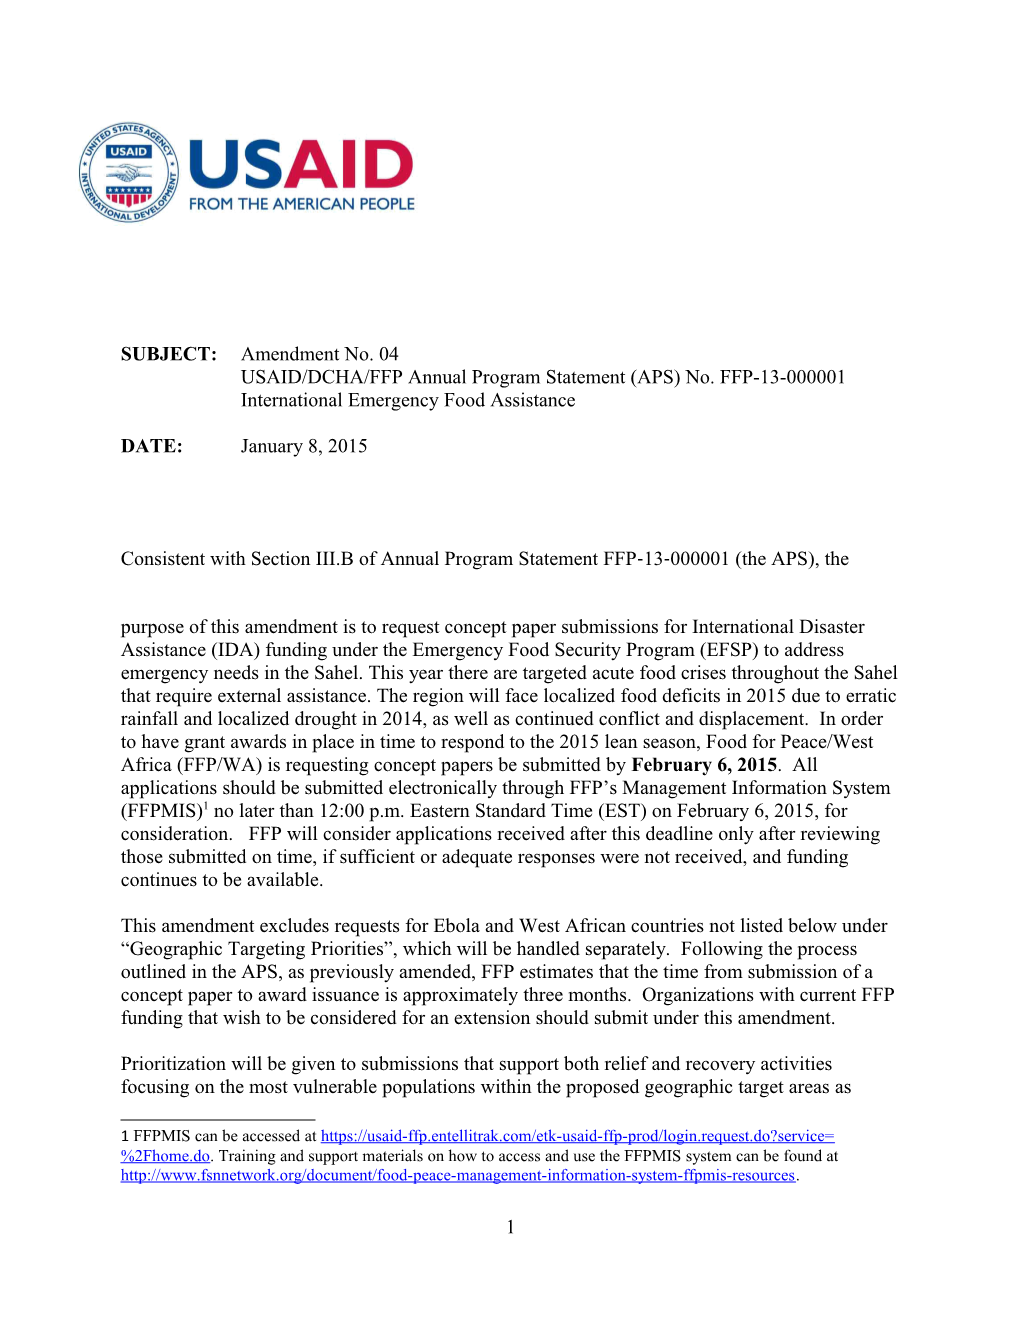 USAID/DCHA/FFP Annual Program Statement (APS) No. FFP-13-000001